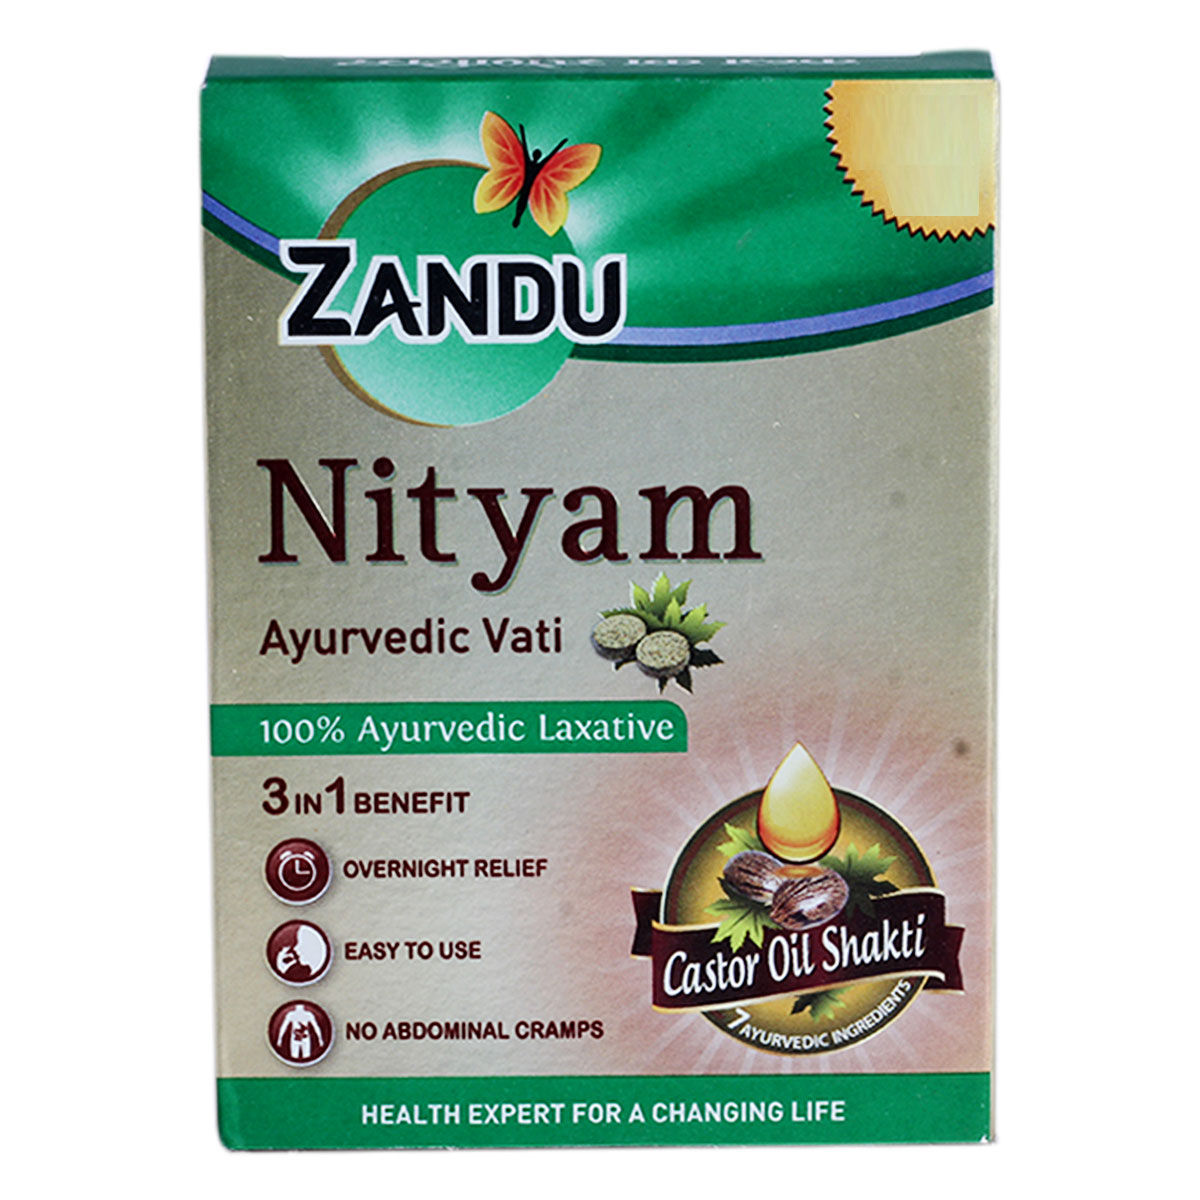 Buy Zandu Nityam Ayurvedic Laxative, 10 Tablets Online